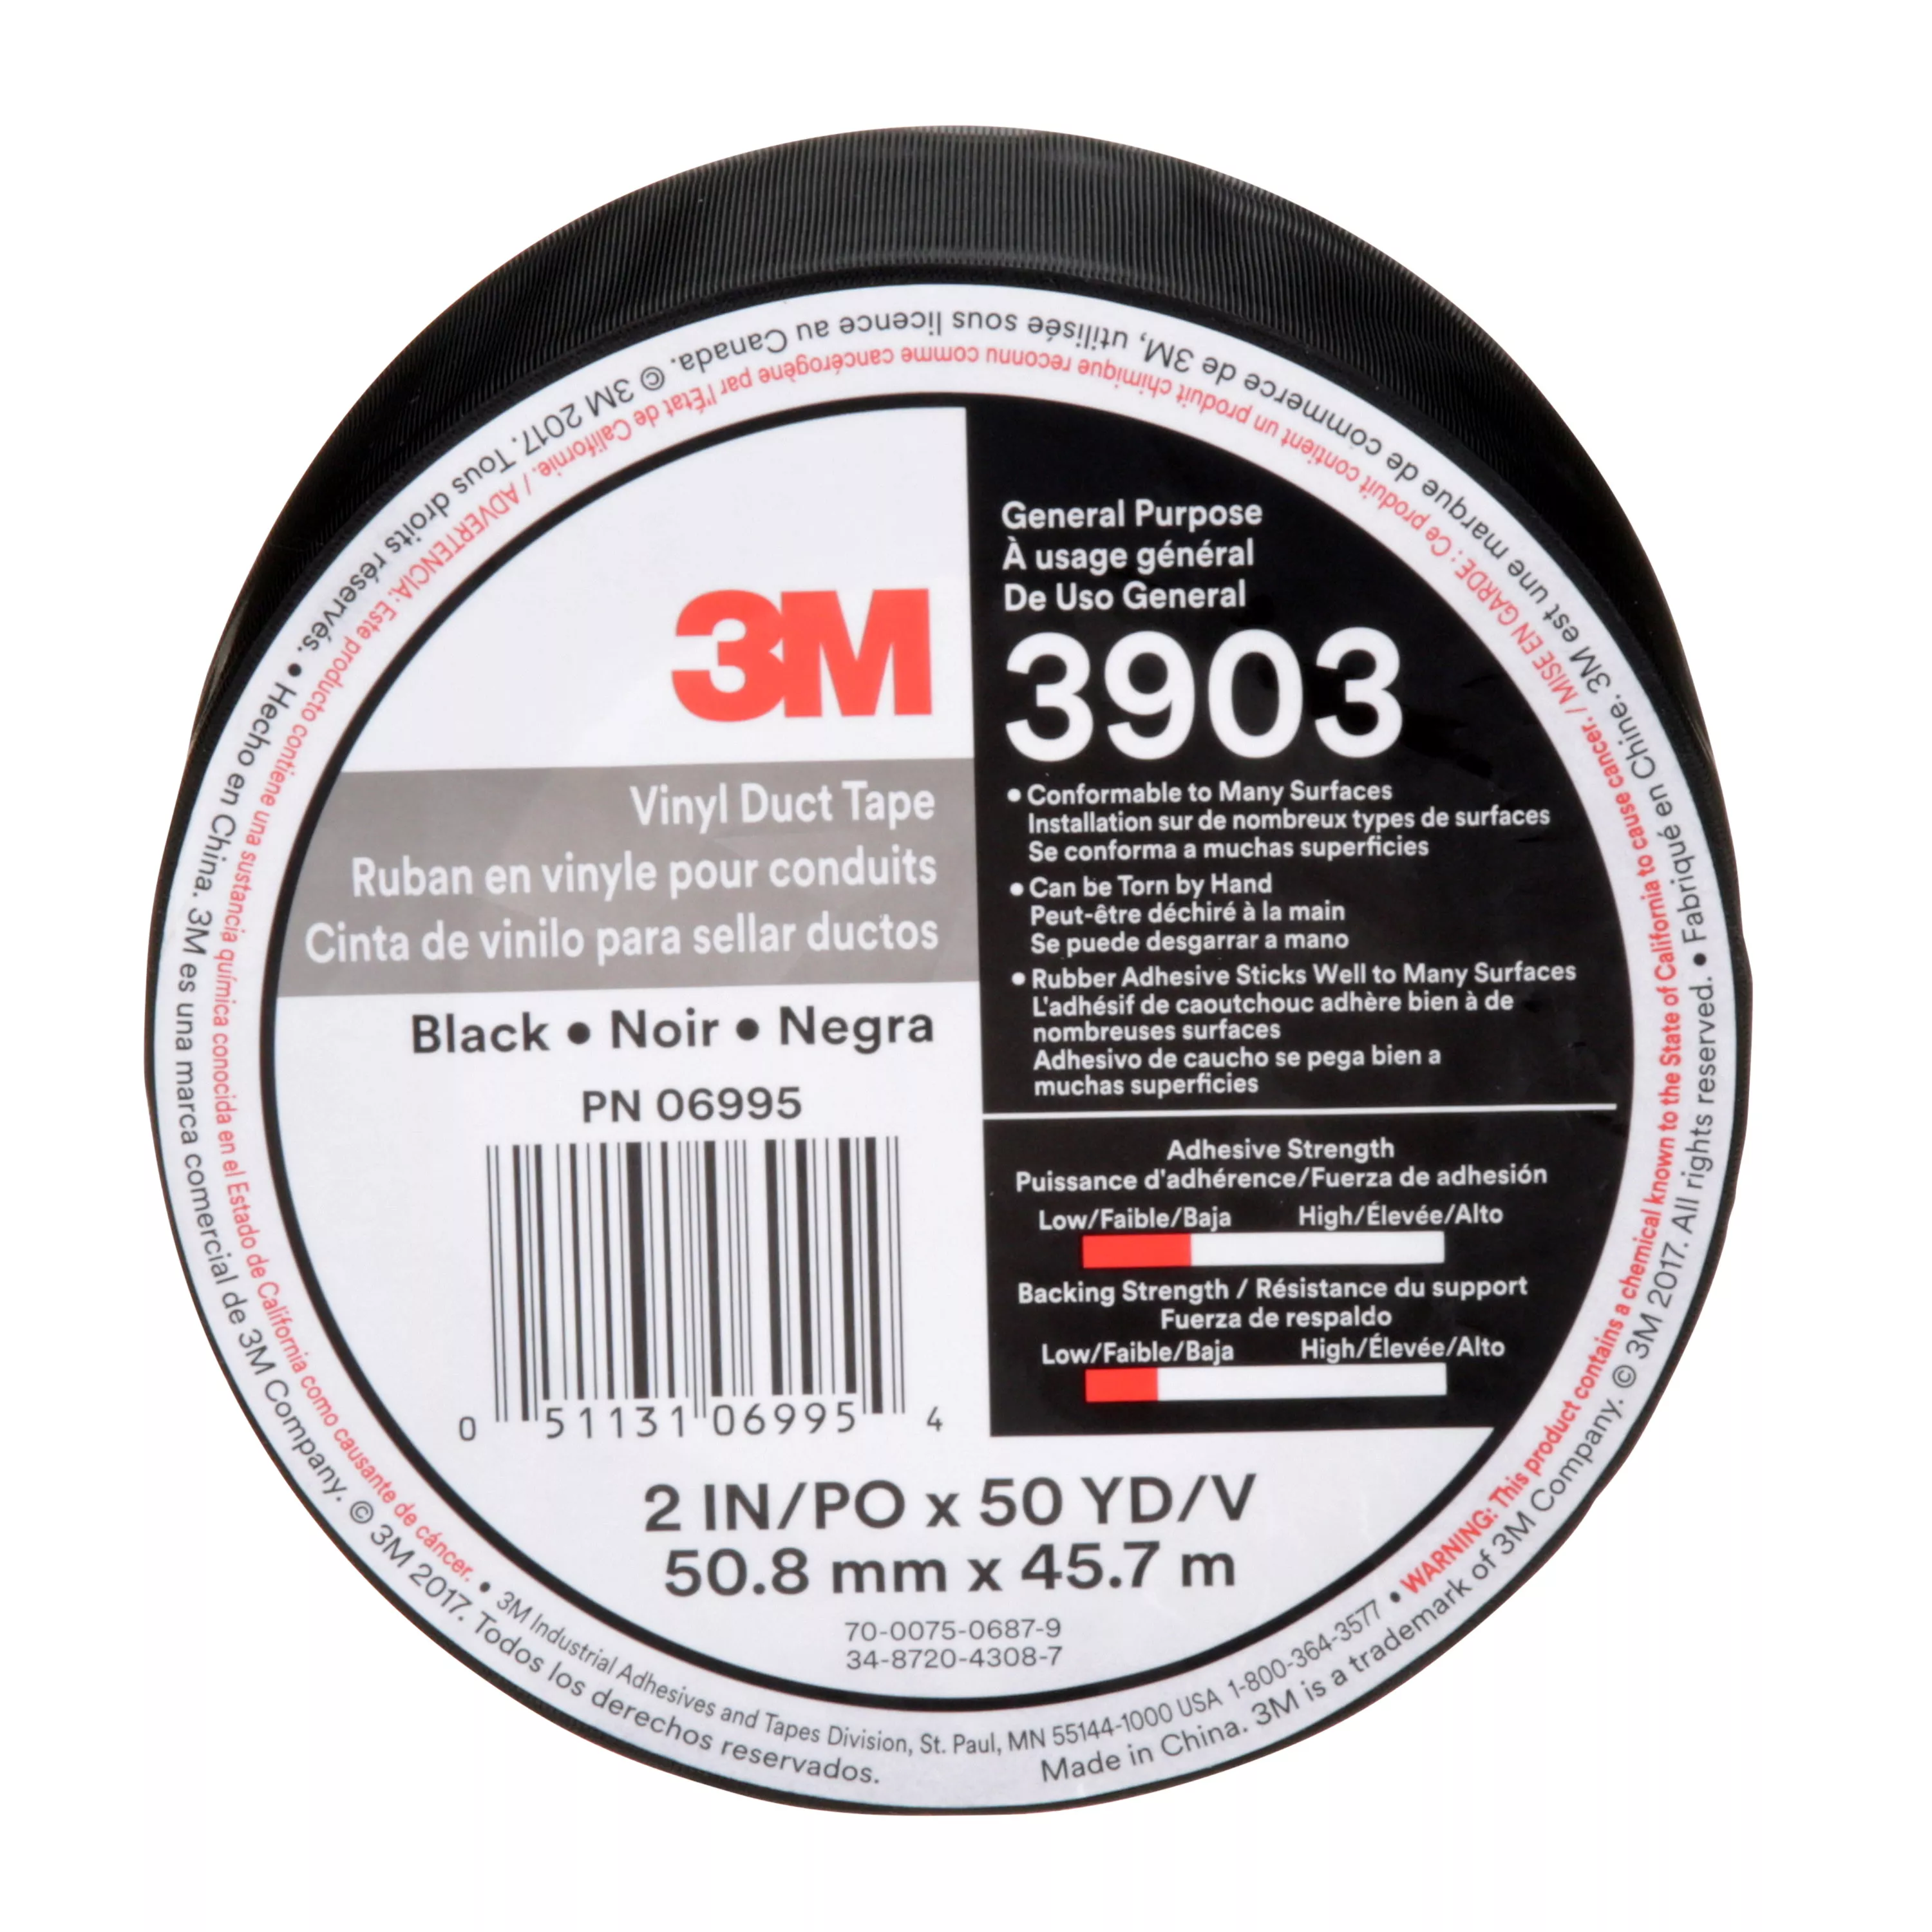 SKU 7100145924 | 3M™ Vinyl Duct Tape 3903